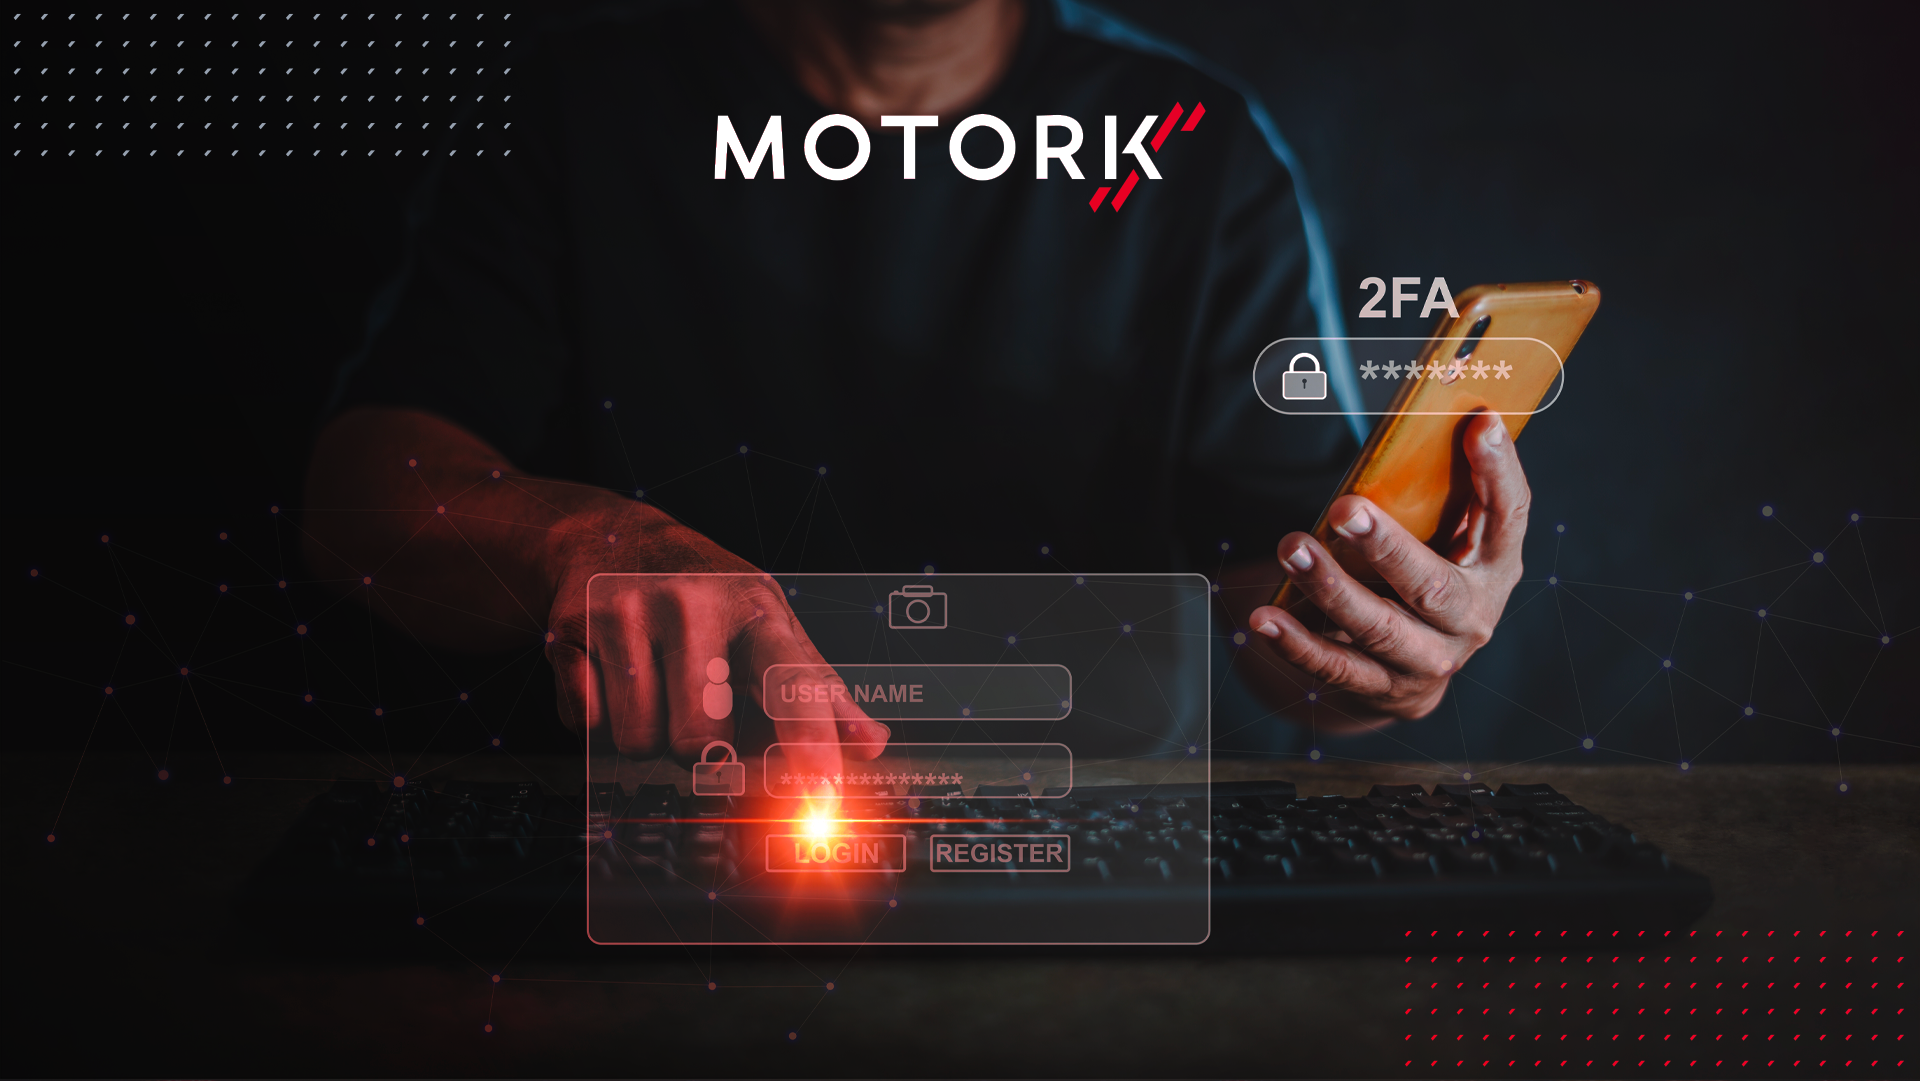 MotorK advances car dealership security